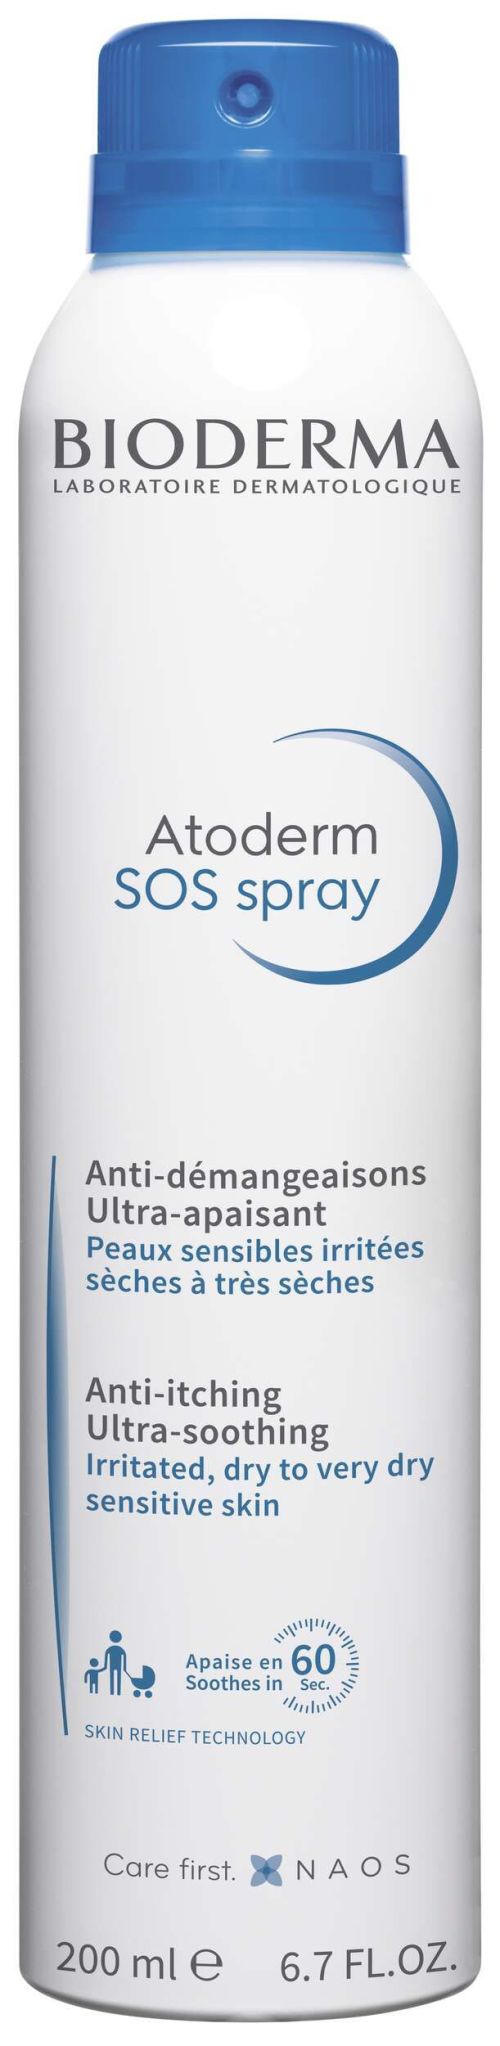 973713454 - Bioderma Atoderm SOS spray Spray ultra lenitivo anti-prurito 200ml - 4703719_2.jpg